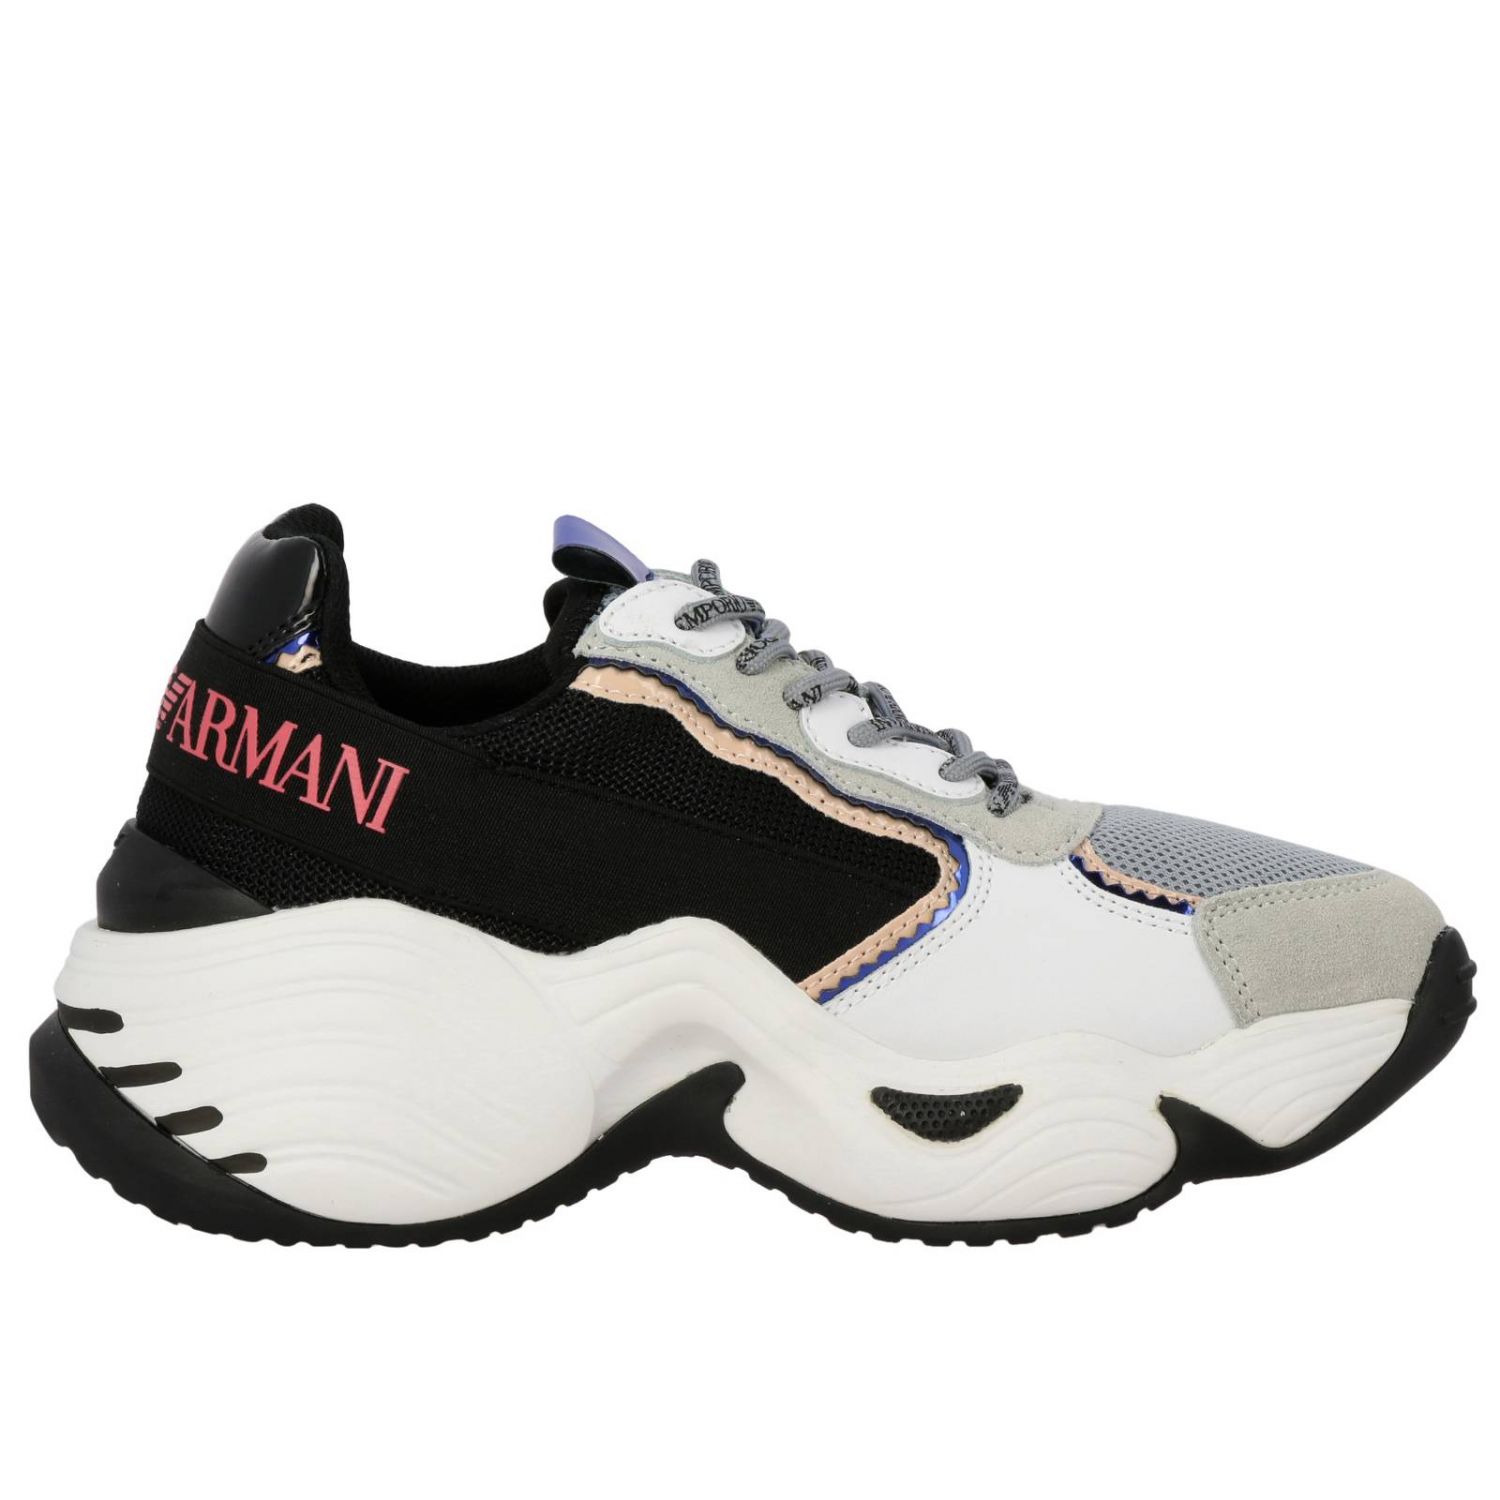 armani sneakers womens, OFF 73%,Buy!